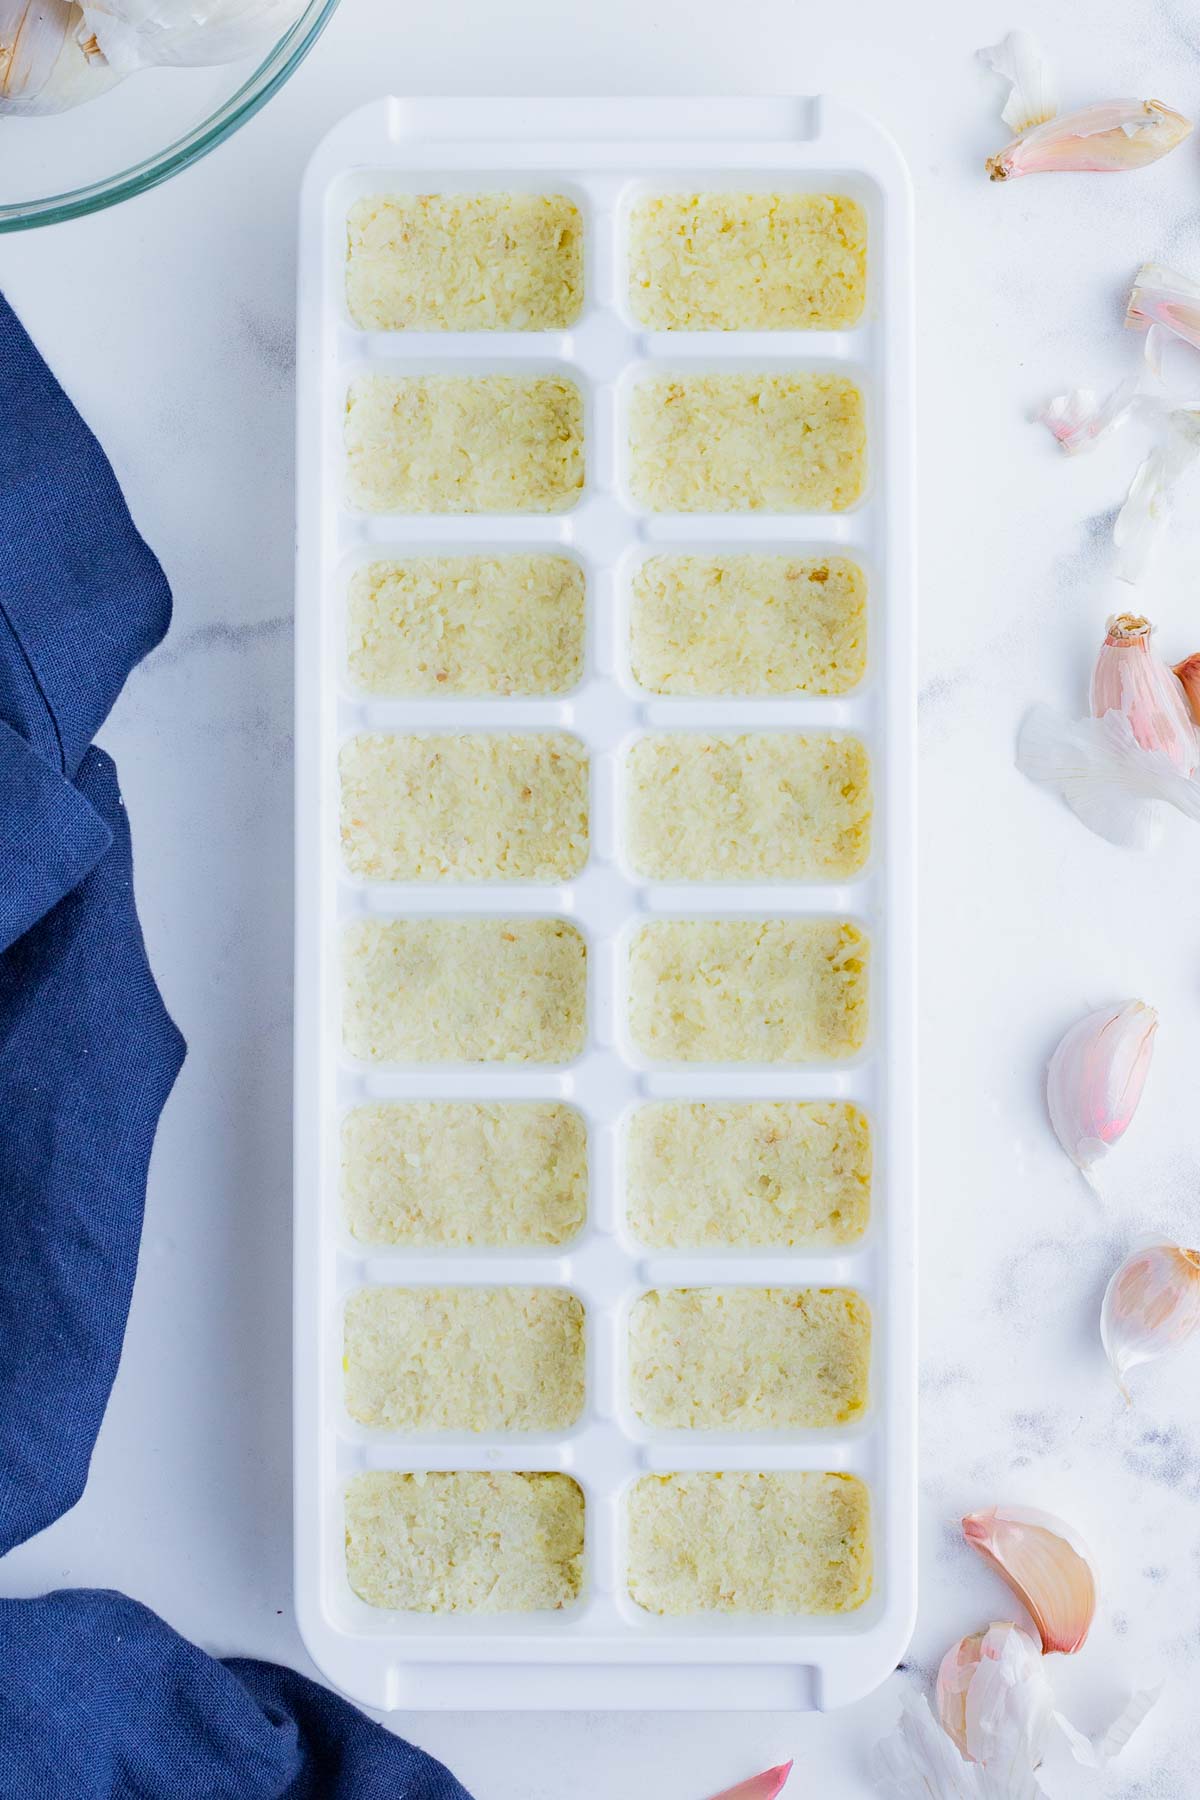 Garlic freezer tray